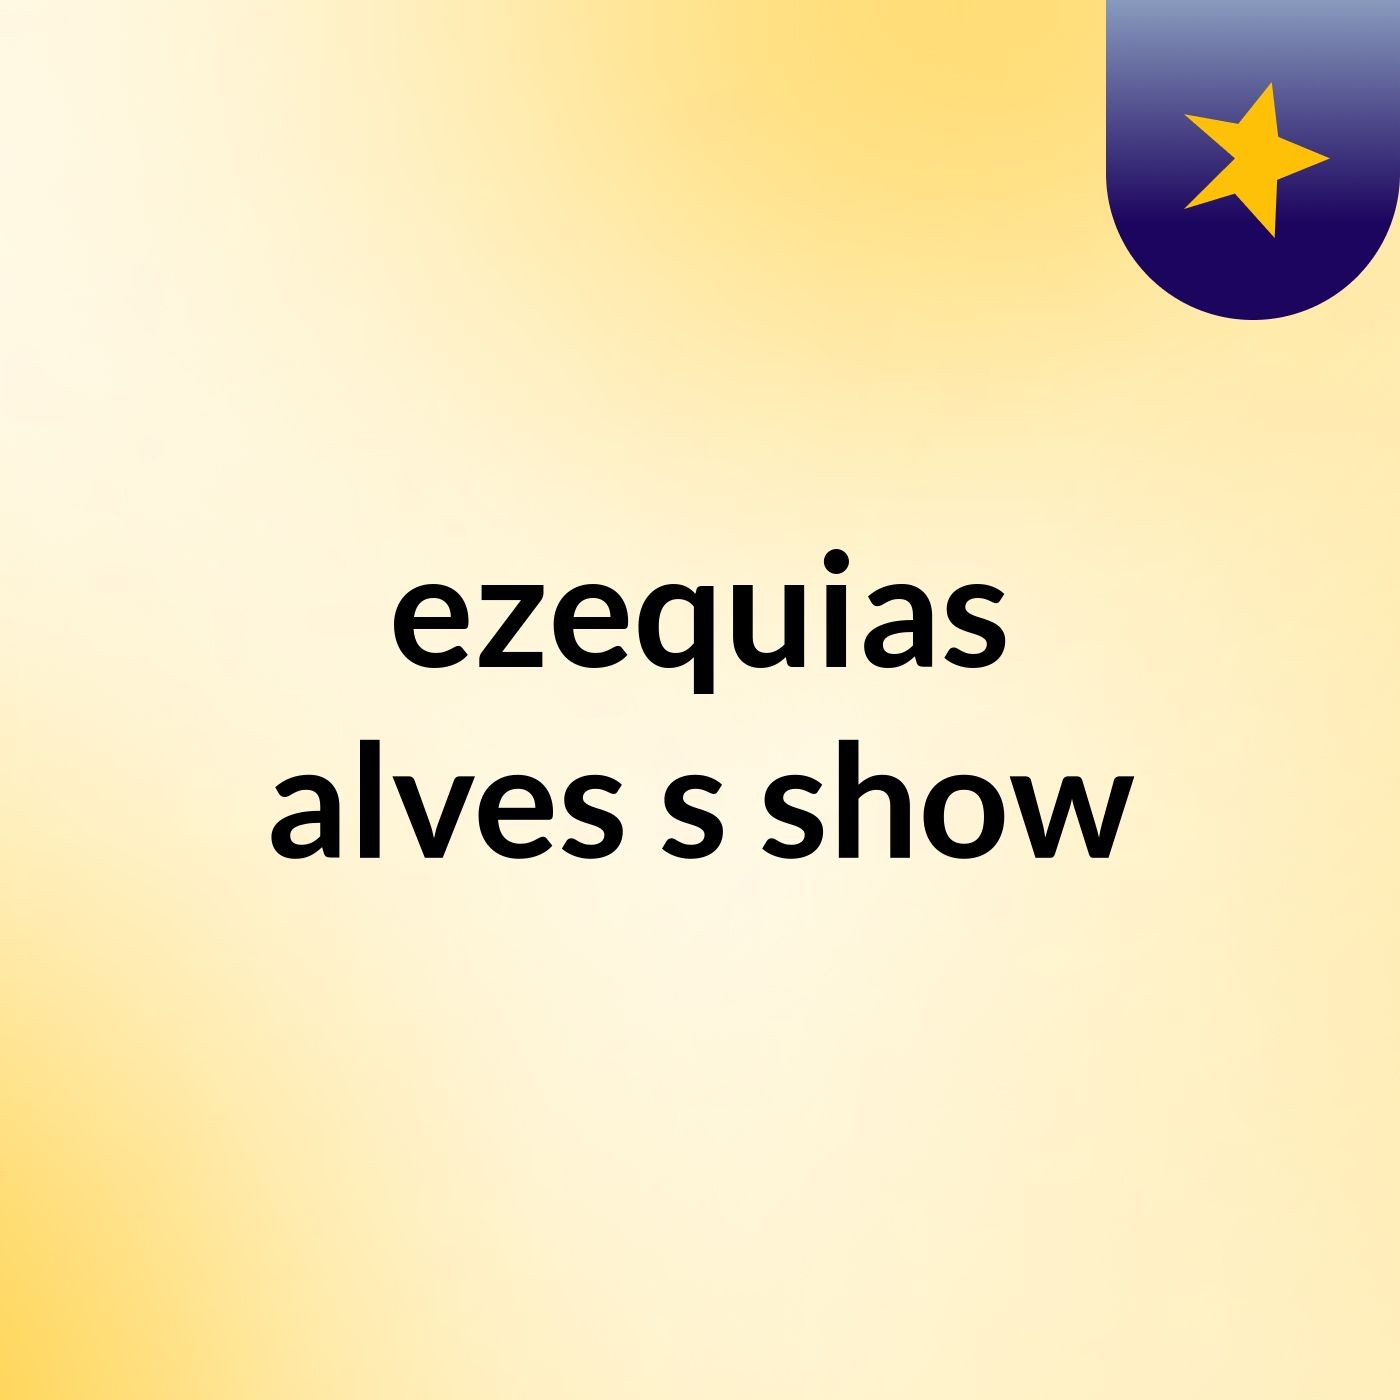 ezequias alves's show